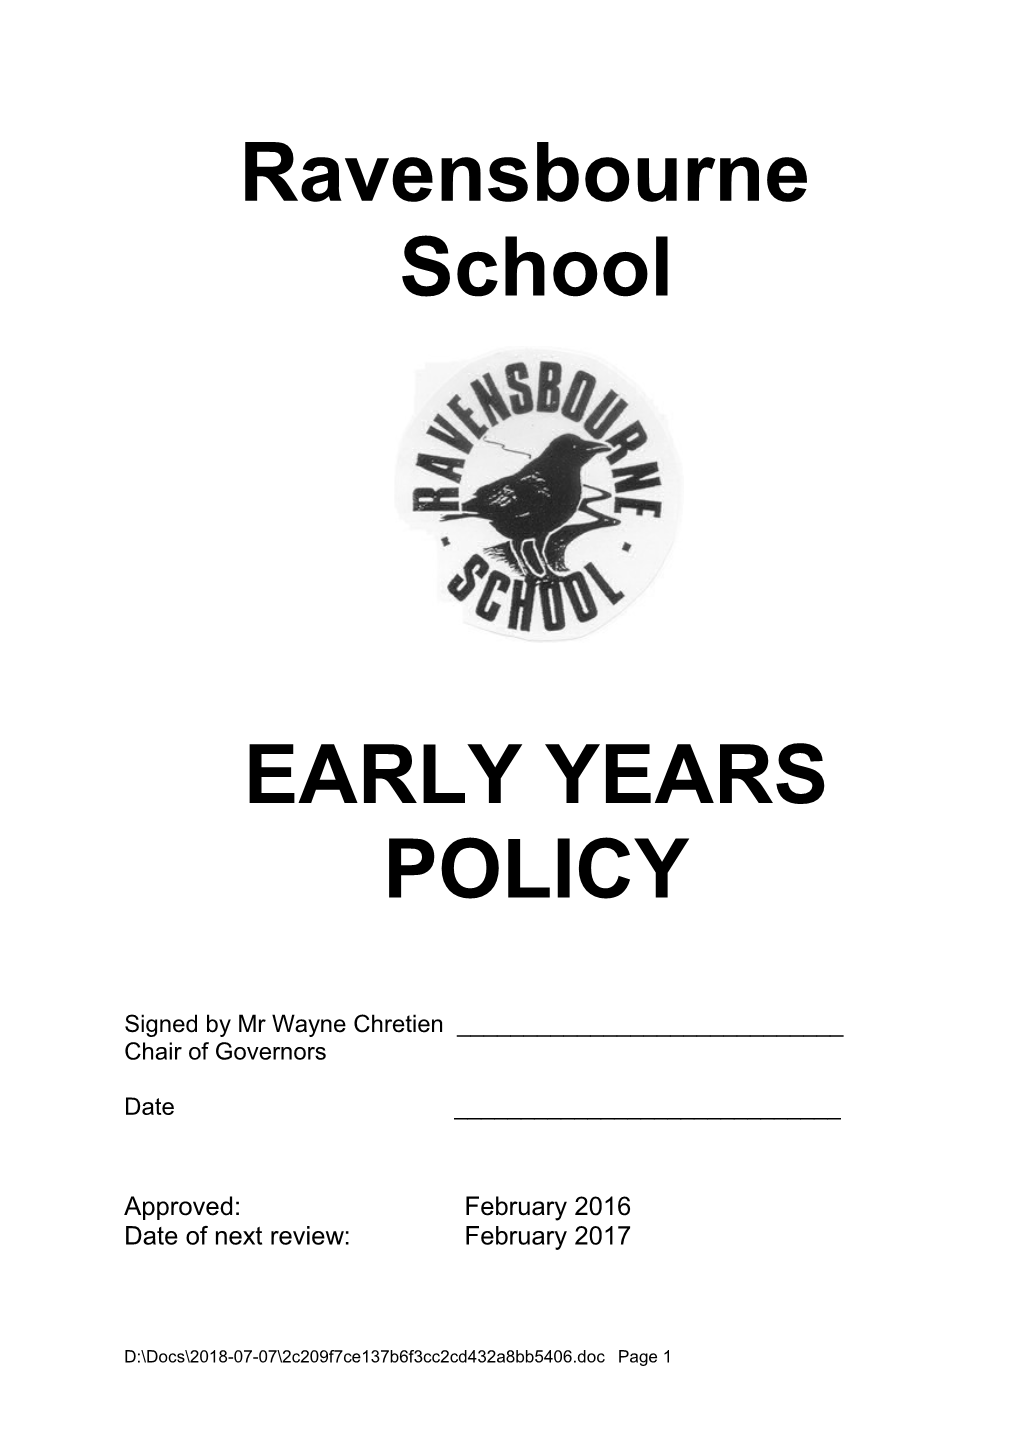 Ravensbourne School Policy